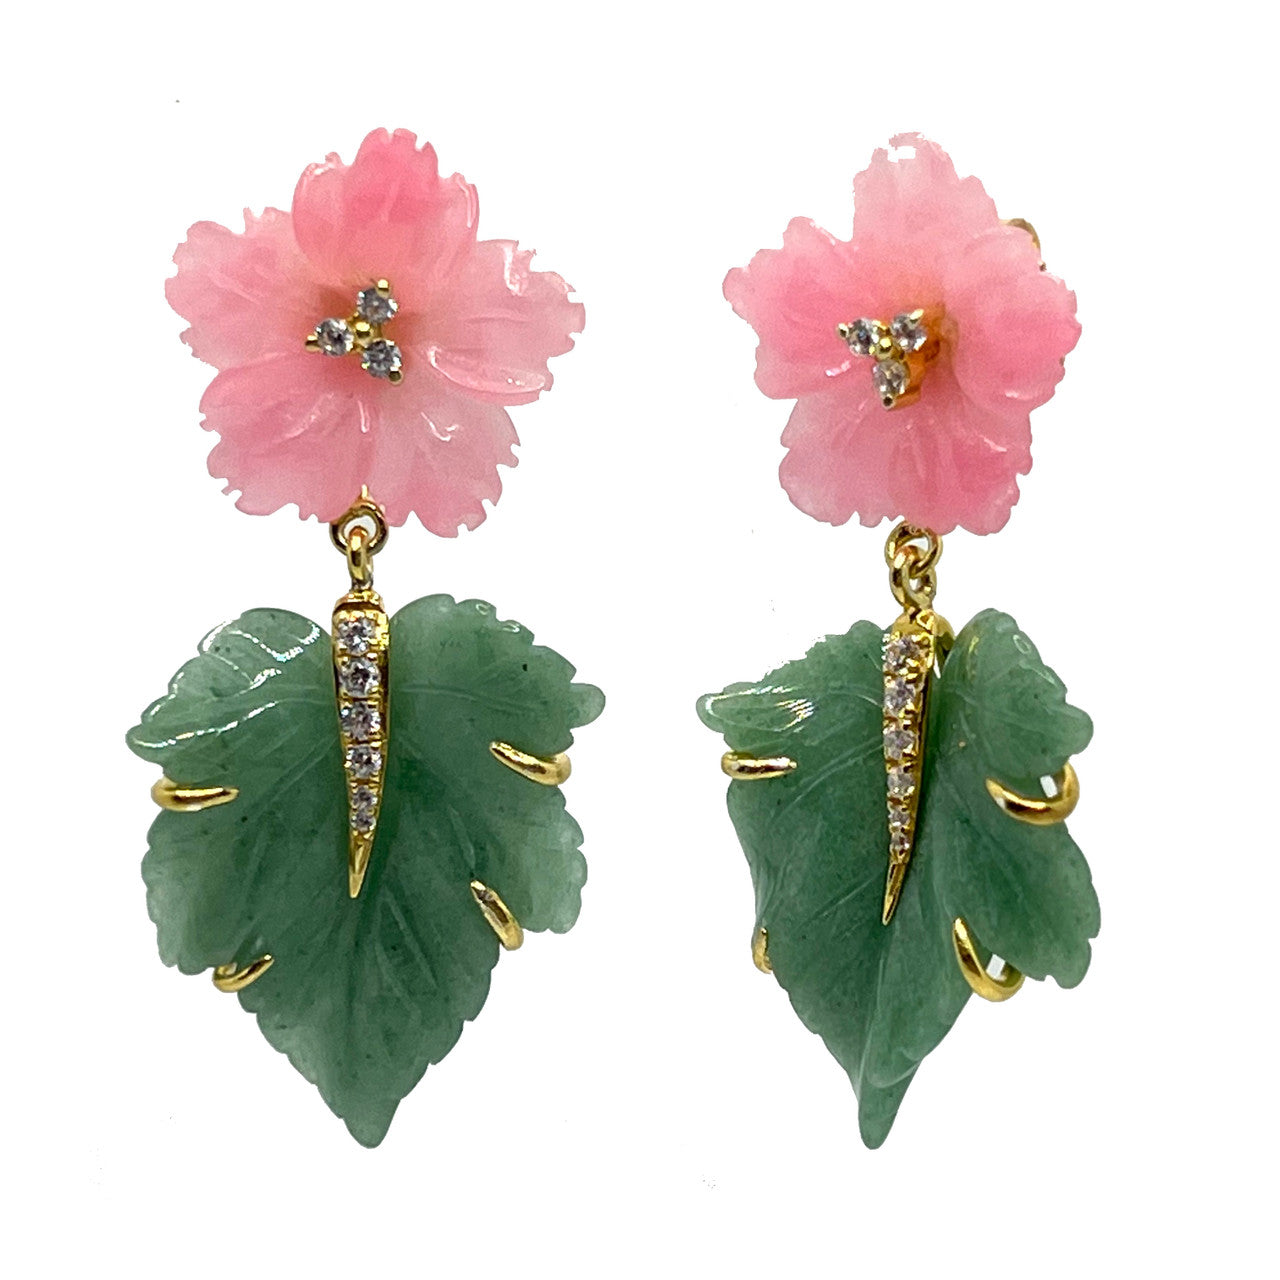 Carved Floral Earrings